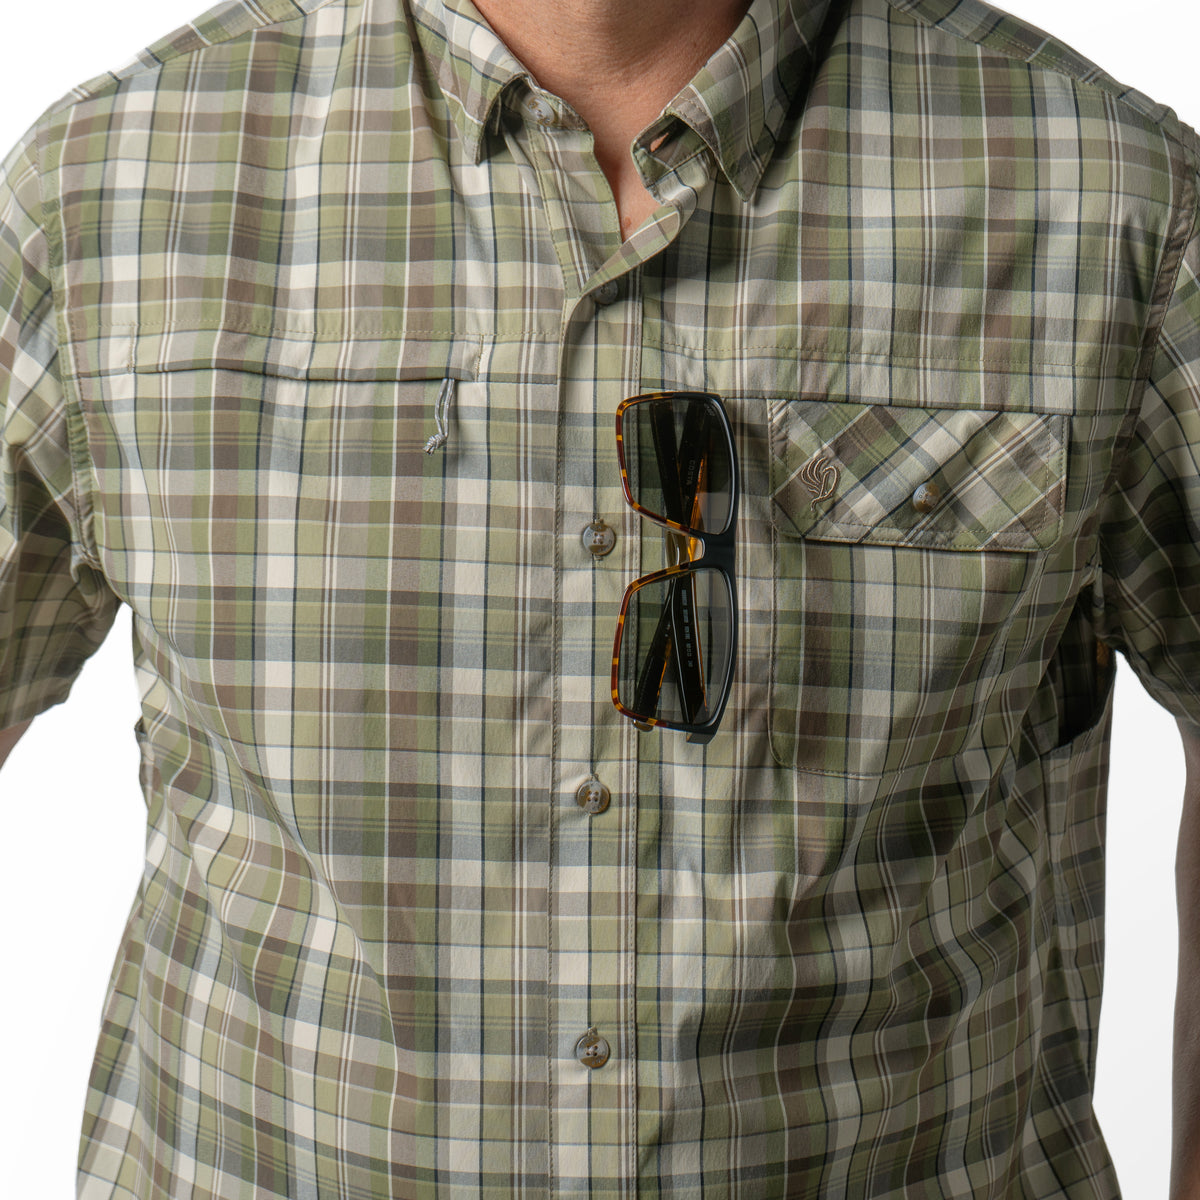 Signature Fishing Shirt - Short Sleeve - Teton Plaid, L